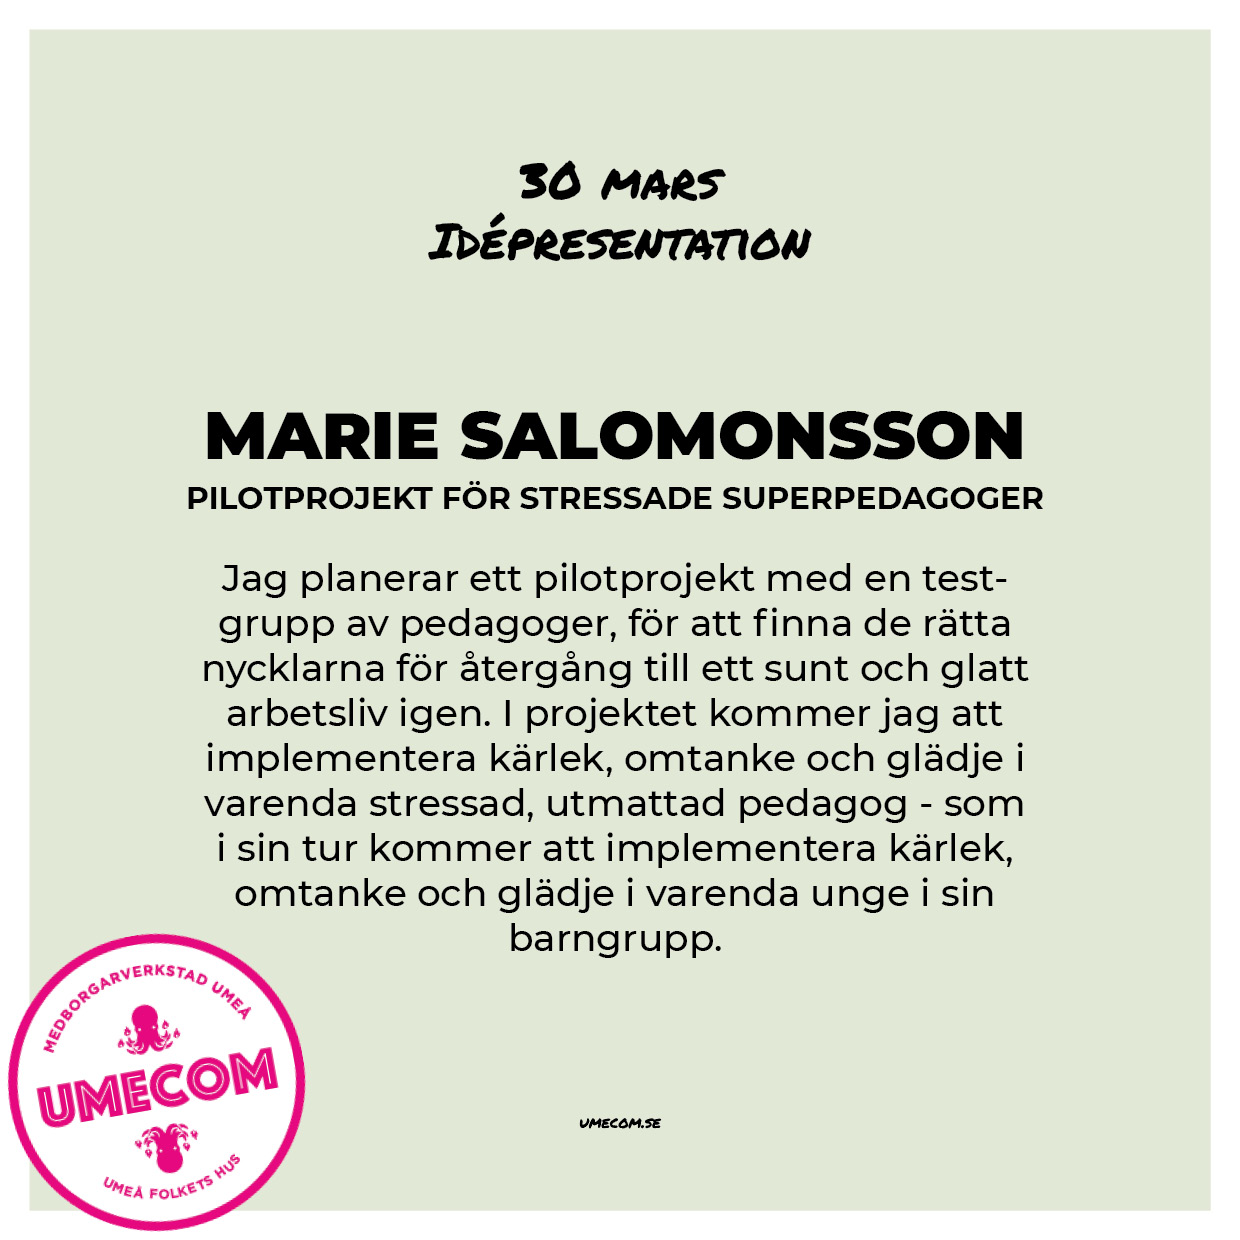 Marie Salomonsson